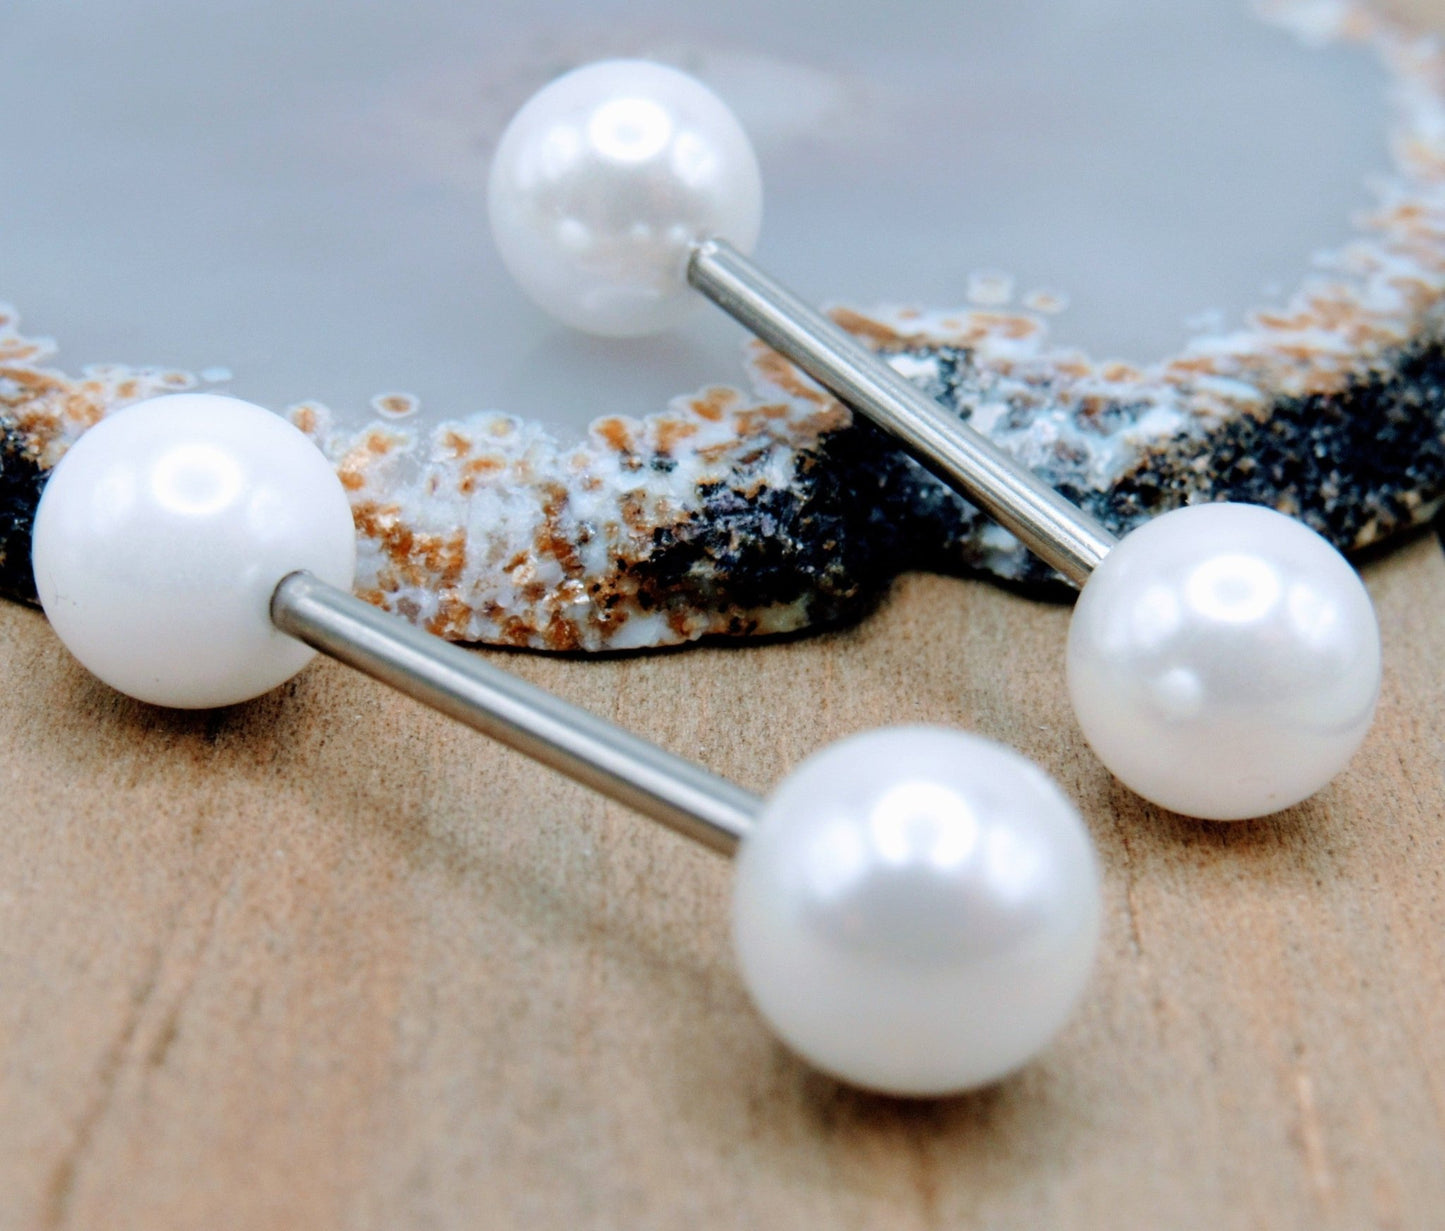 14g 8mm Pearl nipple piercing barbell set 5/8" externally threaded 316L stainless steel pair straight bars - Siren Body Jewelry